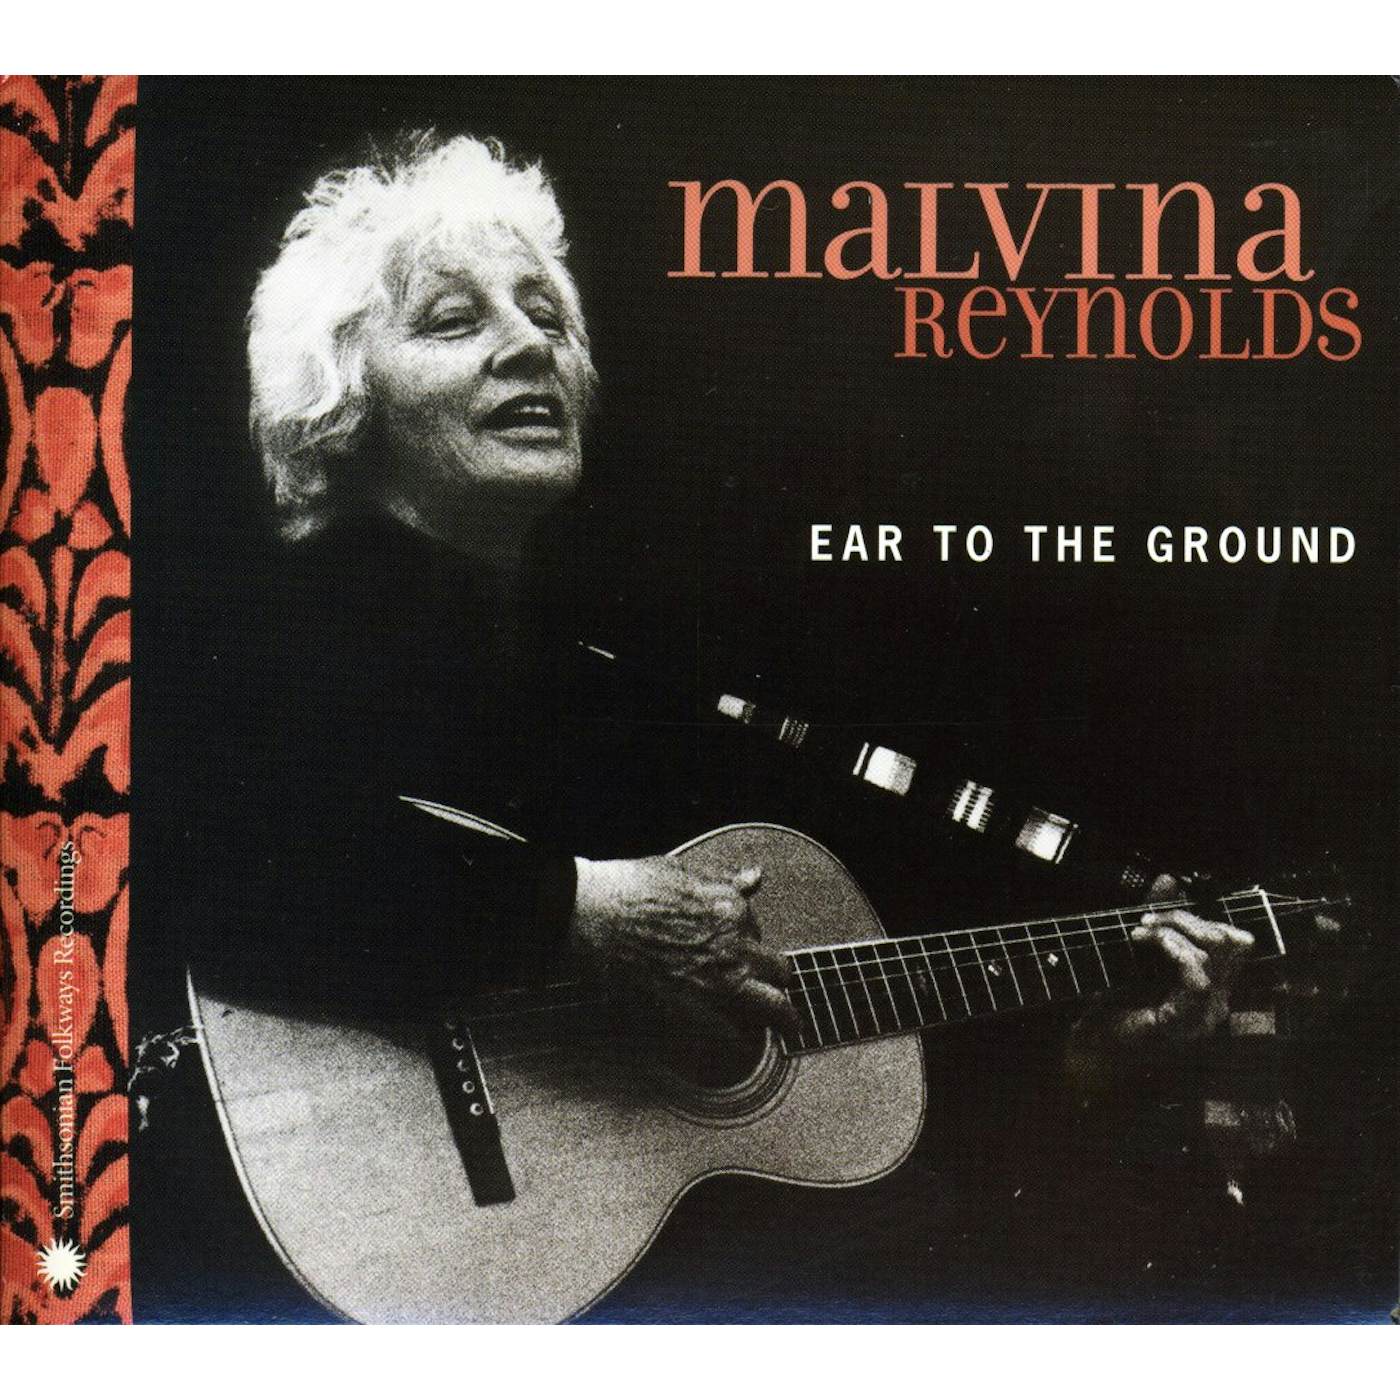 Malvina Reynolds EAR TO THE GROUND CD